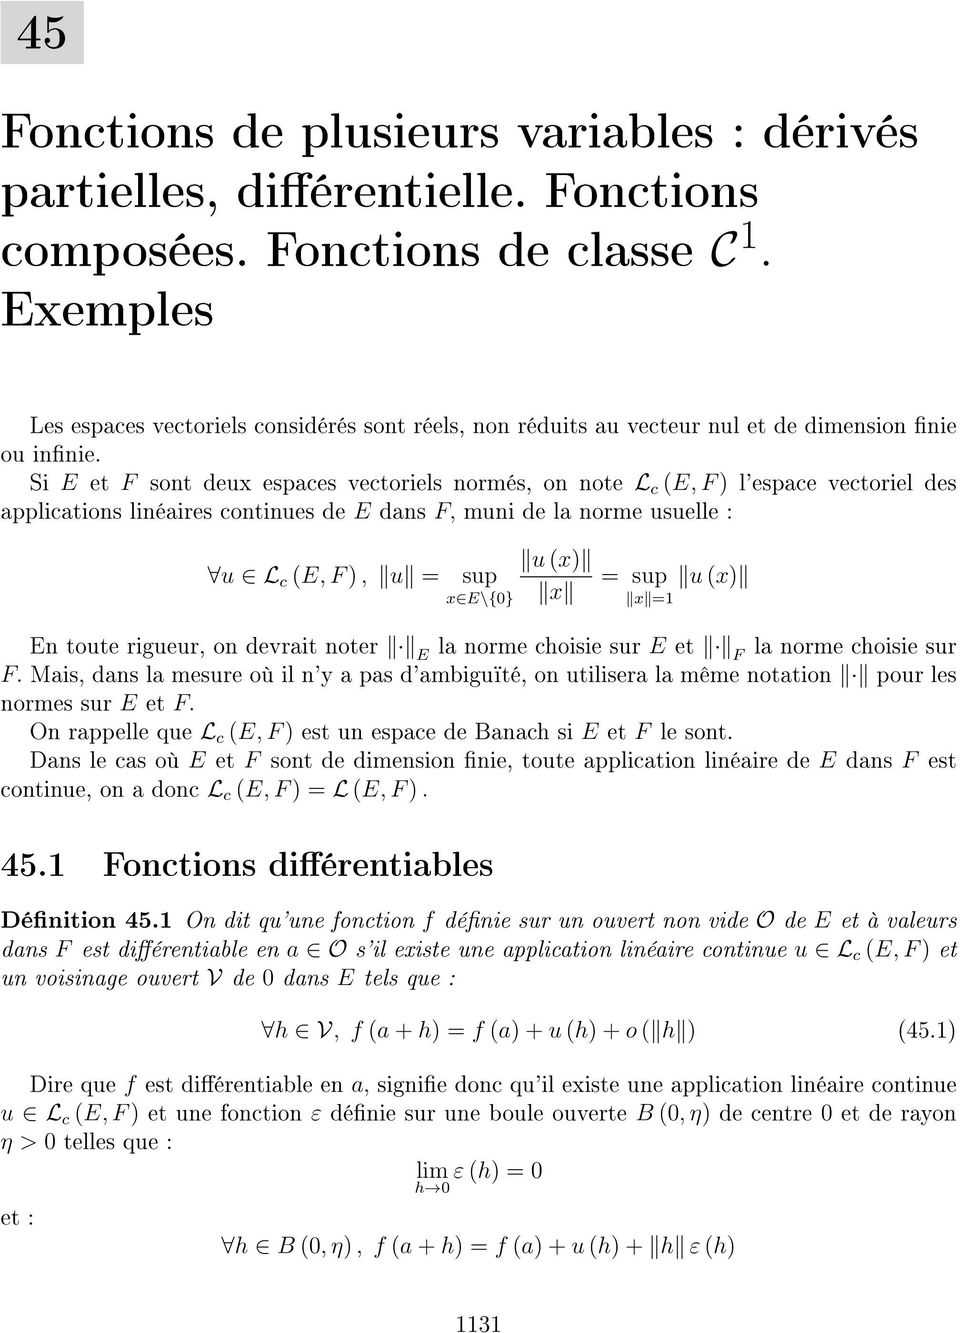 Si E et F sont deux espaces vectoriels normés, on note L c (E, F ) l'espace vectoriel des applications linéaires continues de E dans F, muni de la norme usuelle : u L c (E, F ), u = u (x) sup x E\{0}